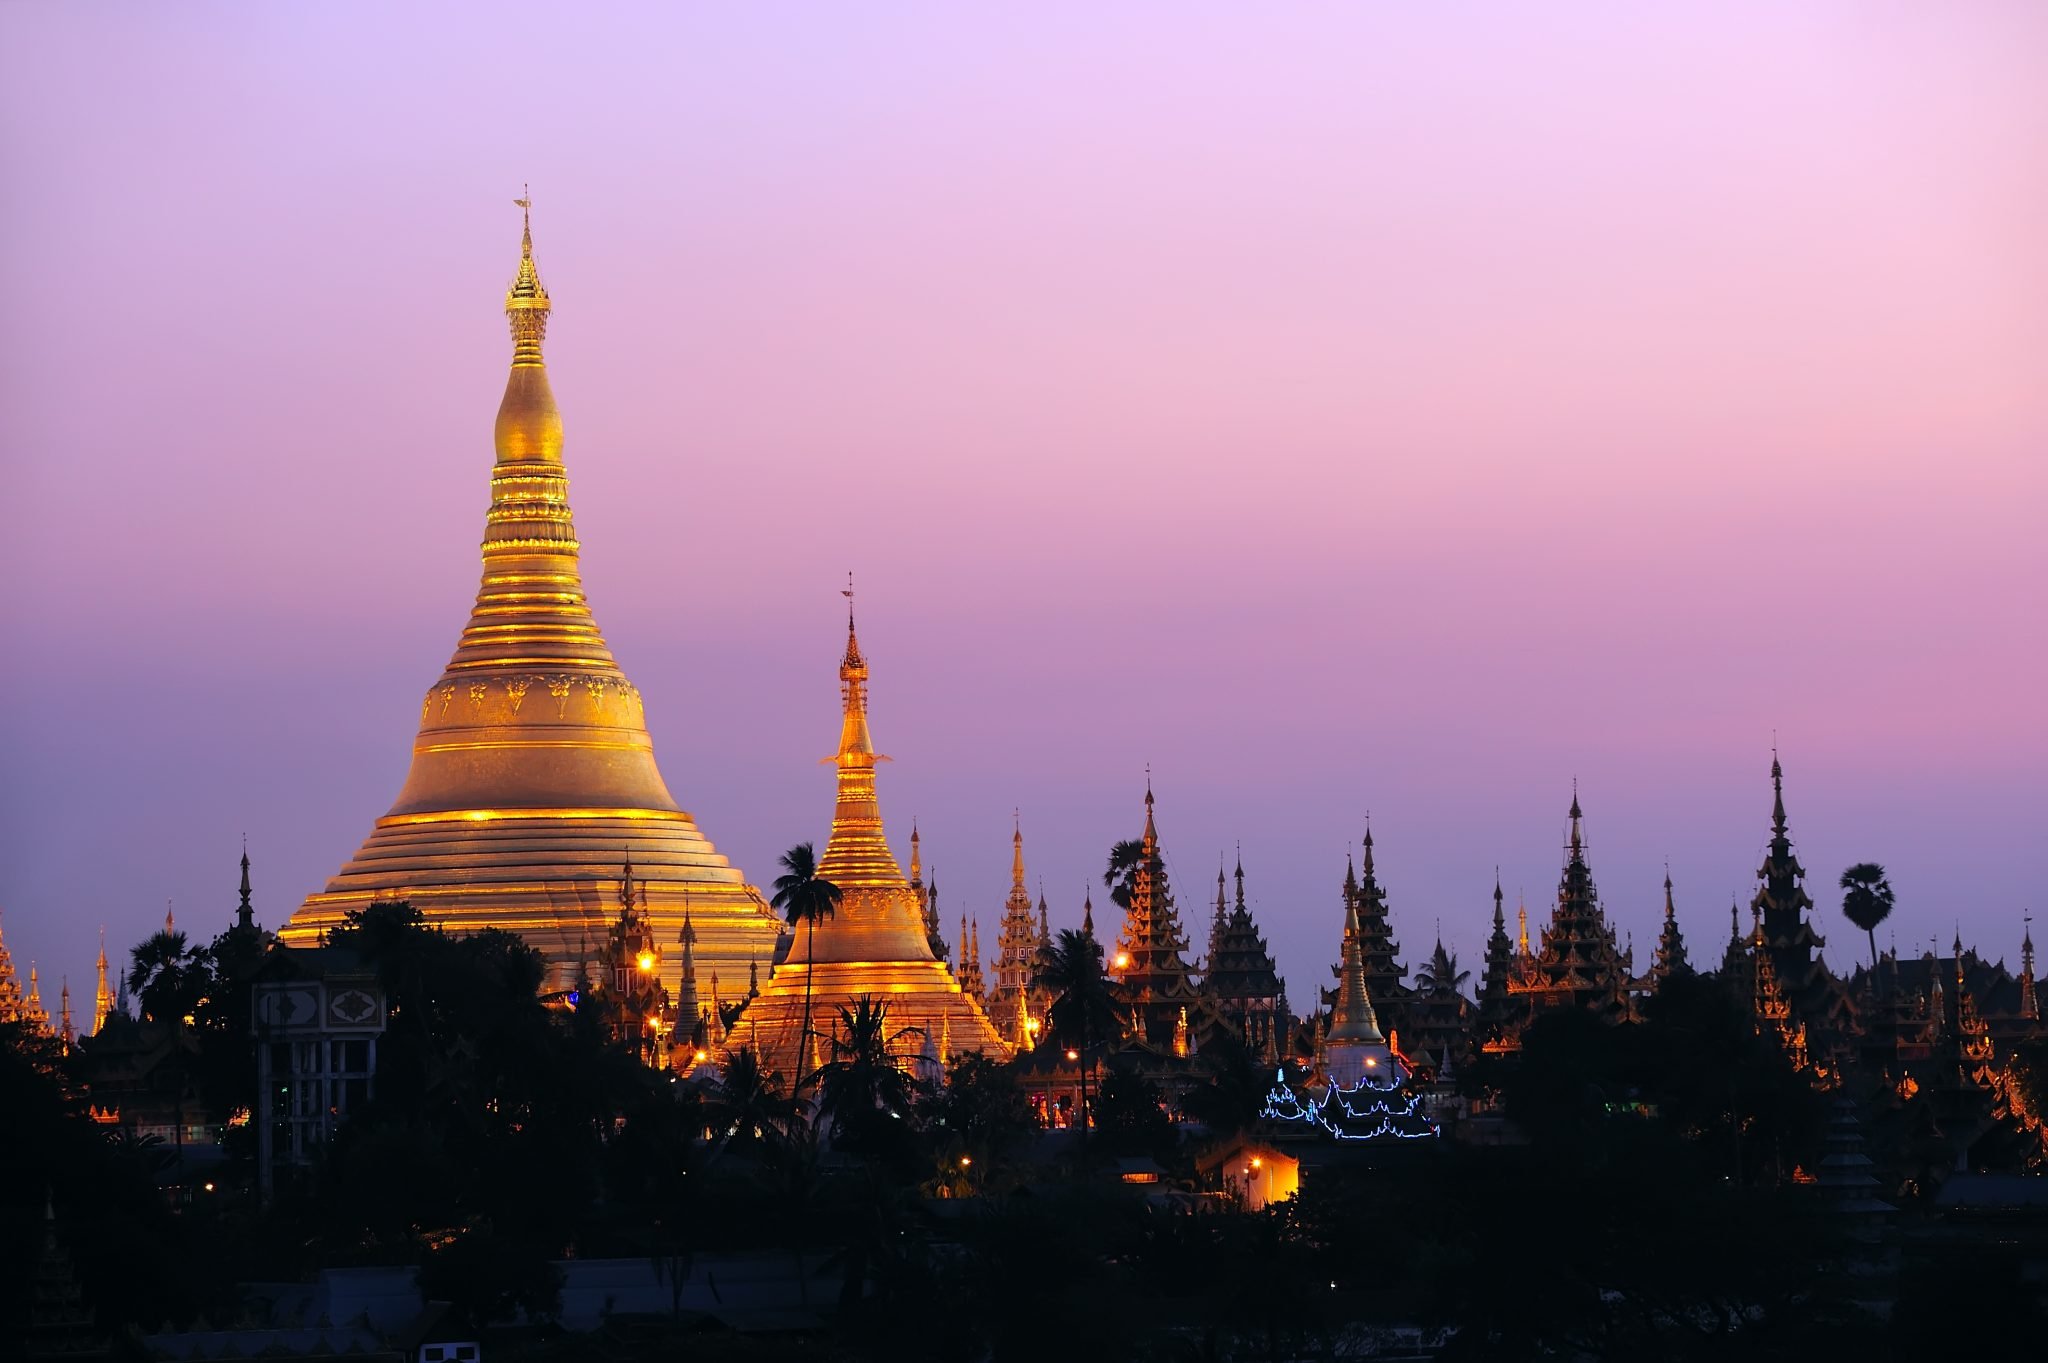 Янгон мьянма. Шведагон Мьянма. Пагода Шведагон Мьянма. Золотая ступа Шведагон. Пагода Шведагон Янгон.